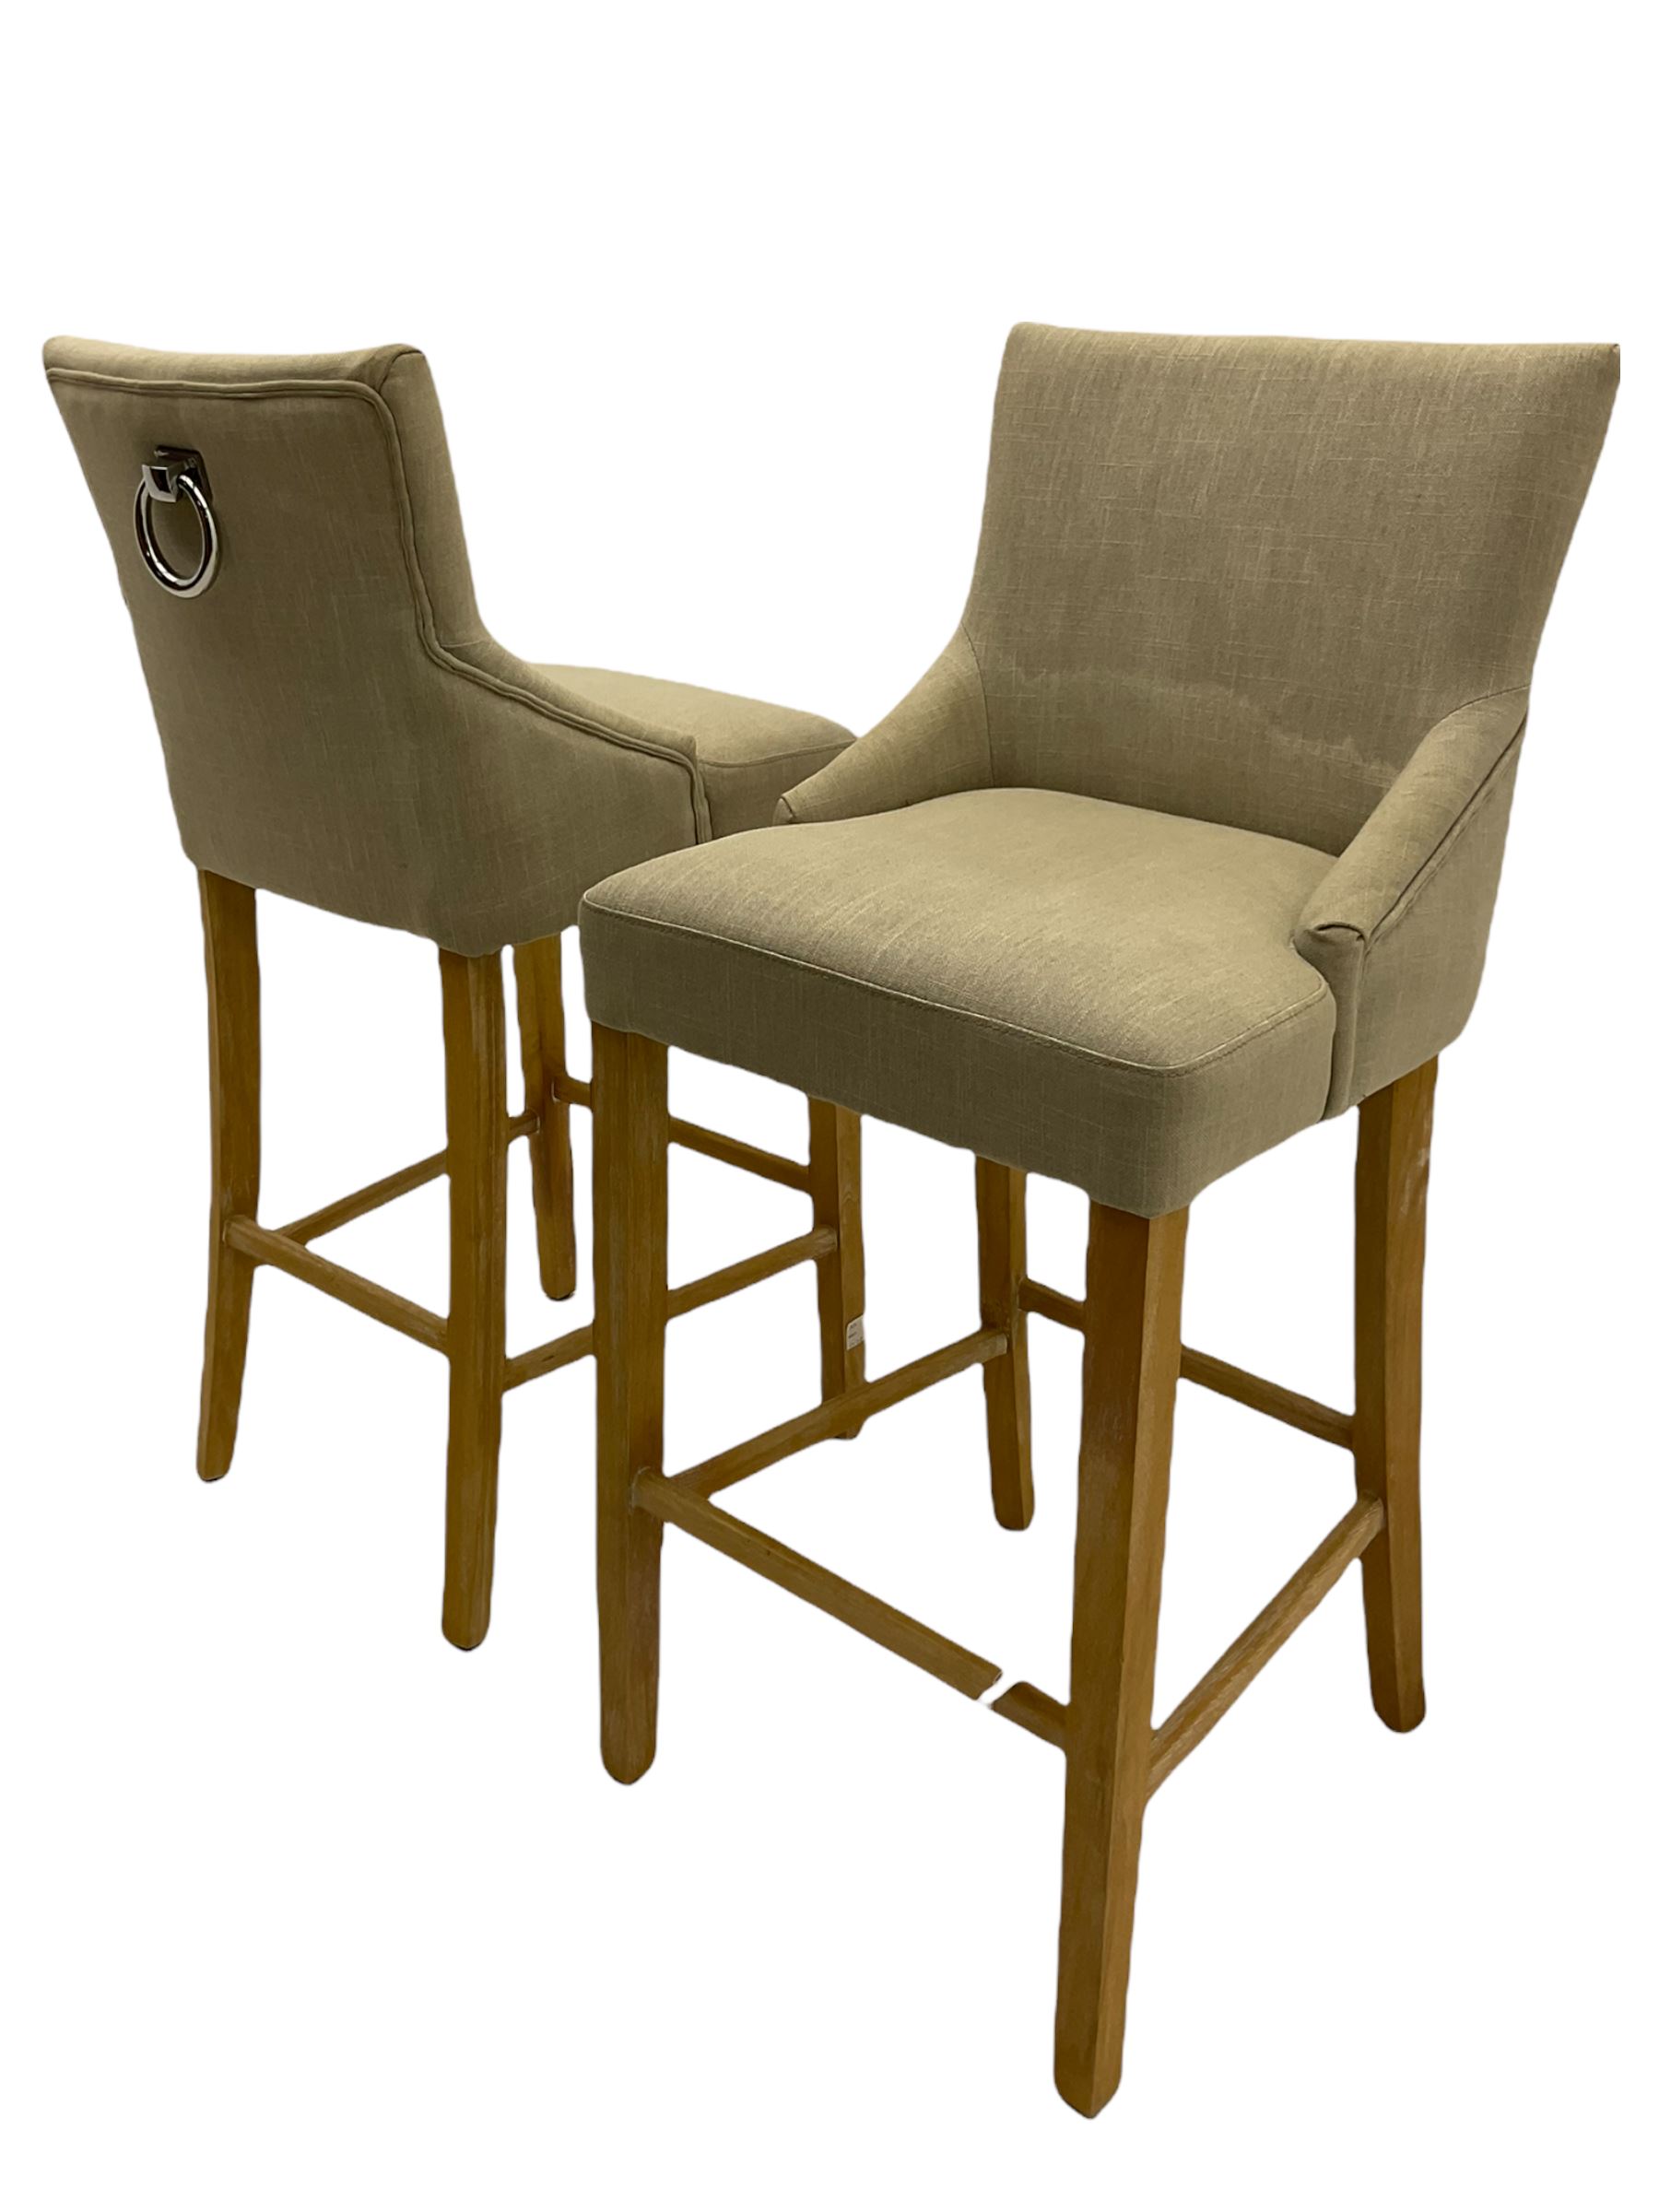 Pair of light oak bar stools - Image 8 of 12